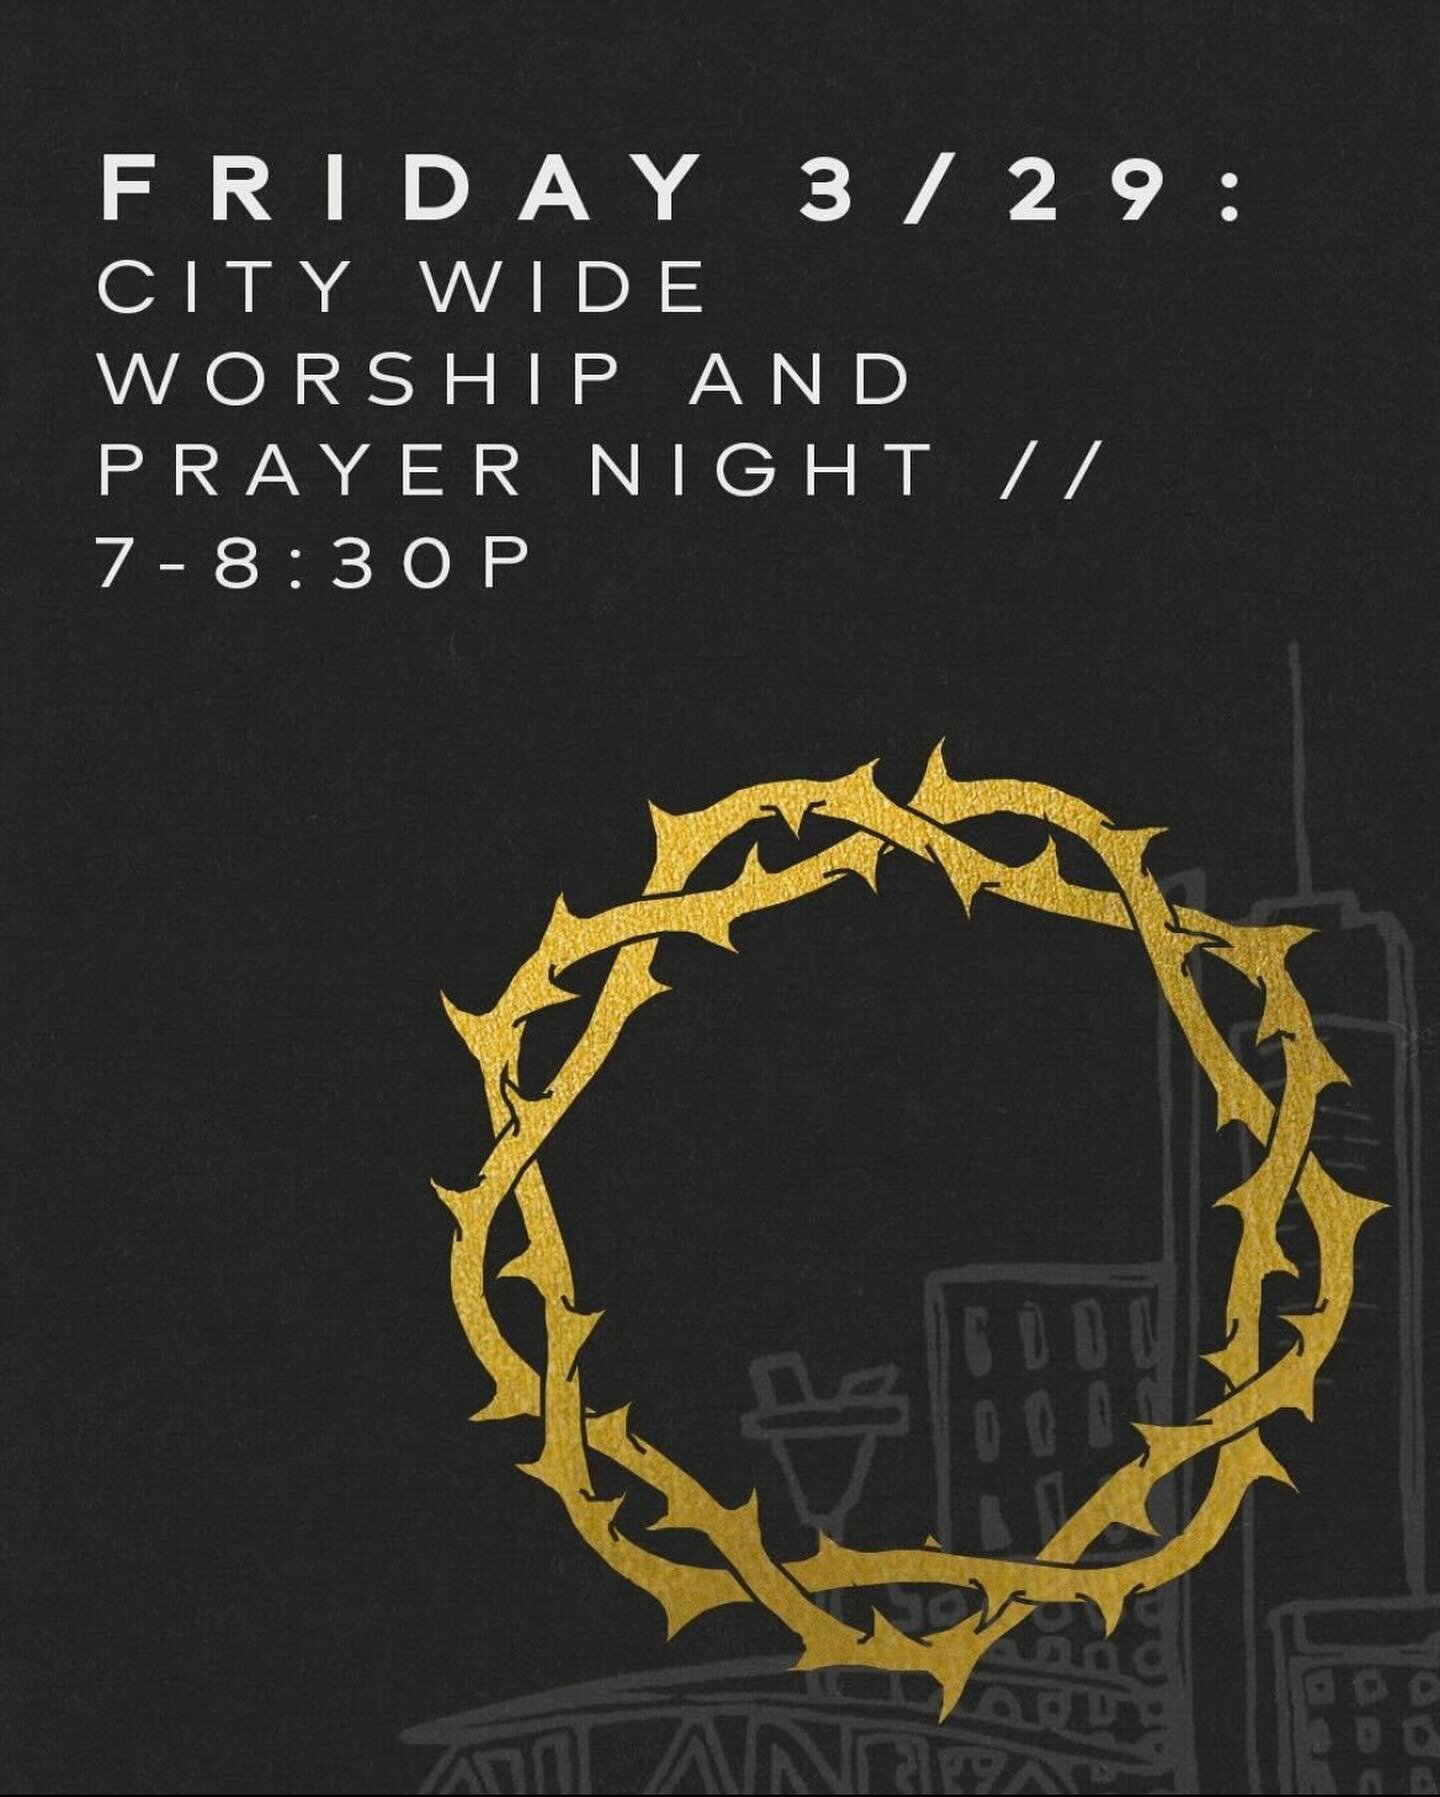 This Good Friday join us for Prayer &amp; Worship @ CT HQ 

3462 Delmar Ln NW Atlanta

#WorshipNight #Prayer #GoodFriday #Atlanta